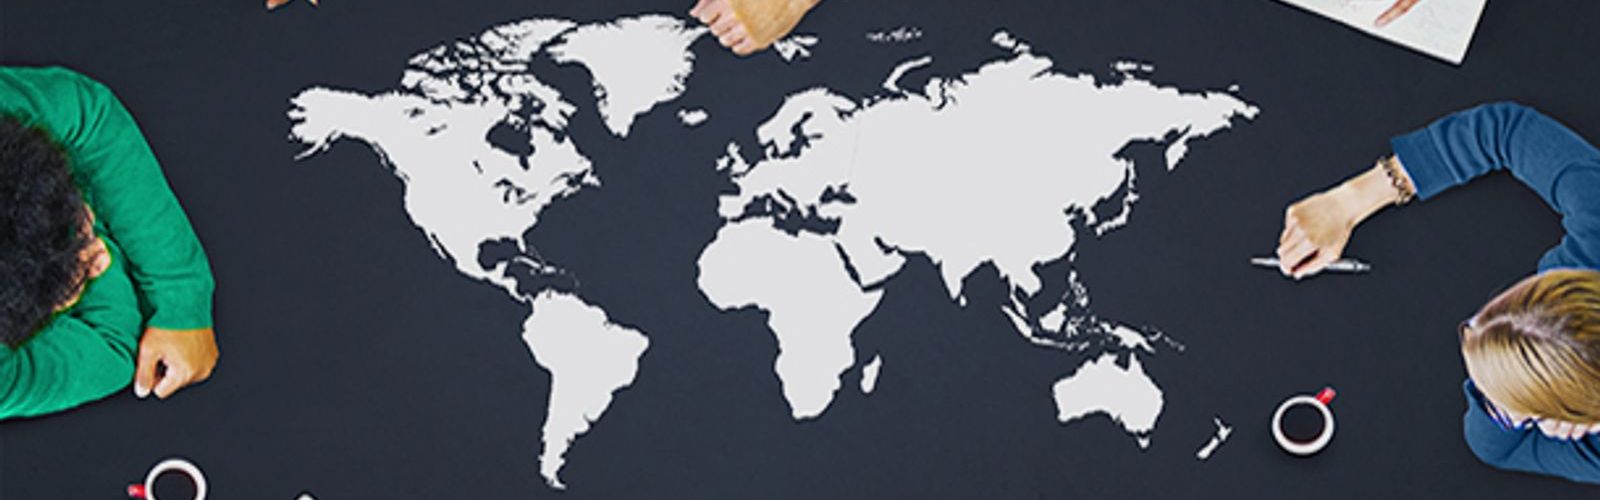 bigstock-World-Global-Cartography-Globa-128250386_web.jpg